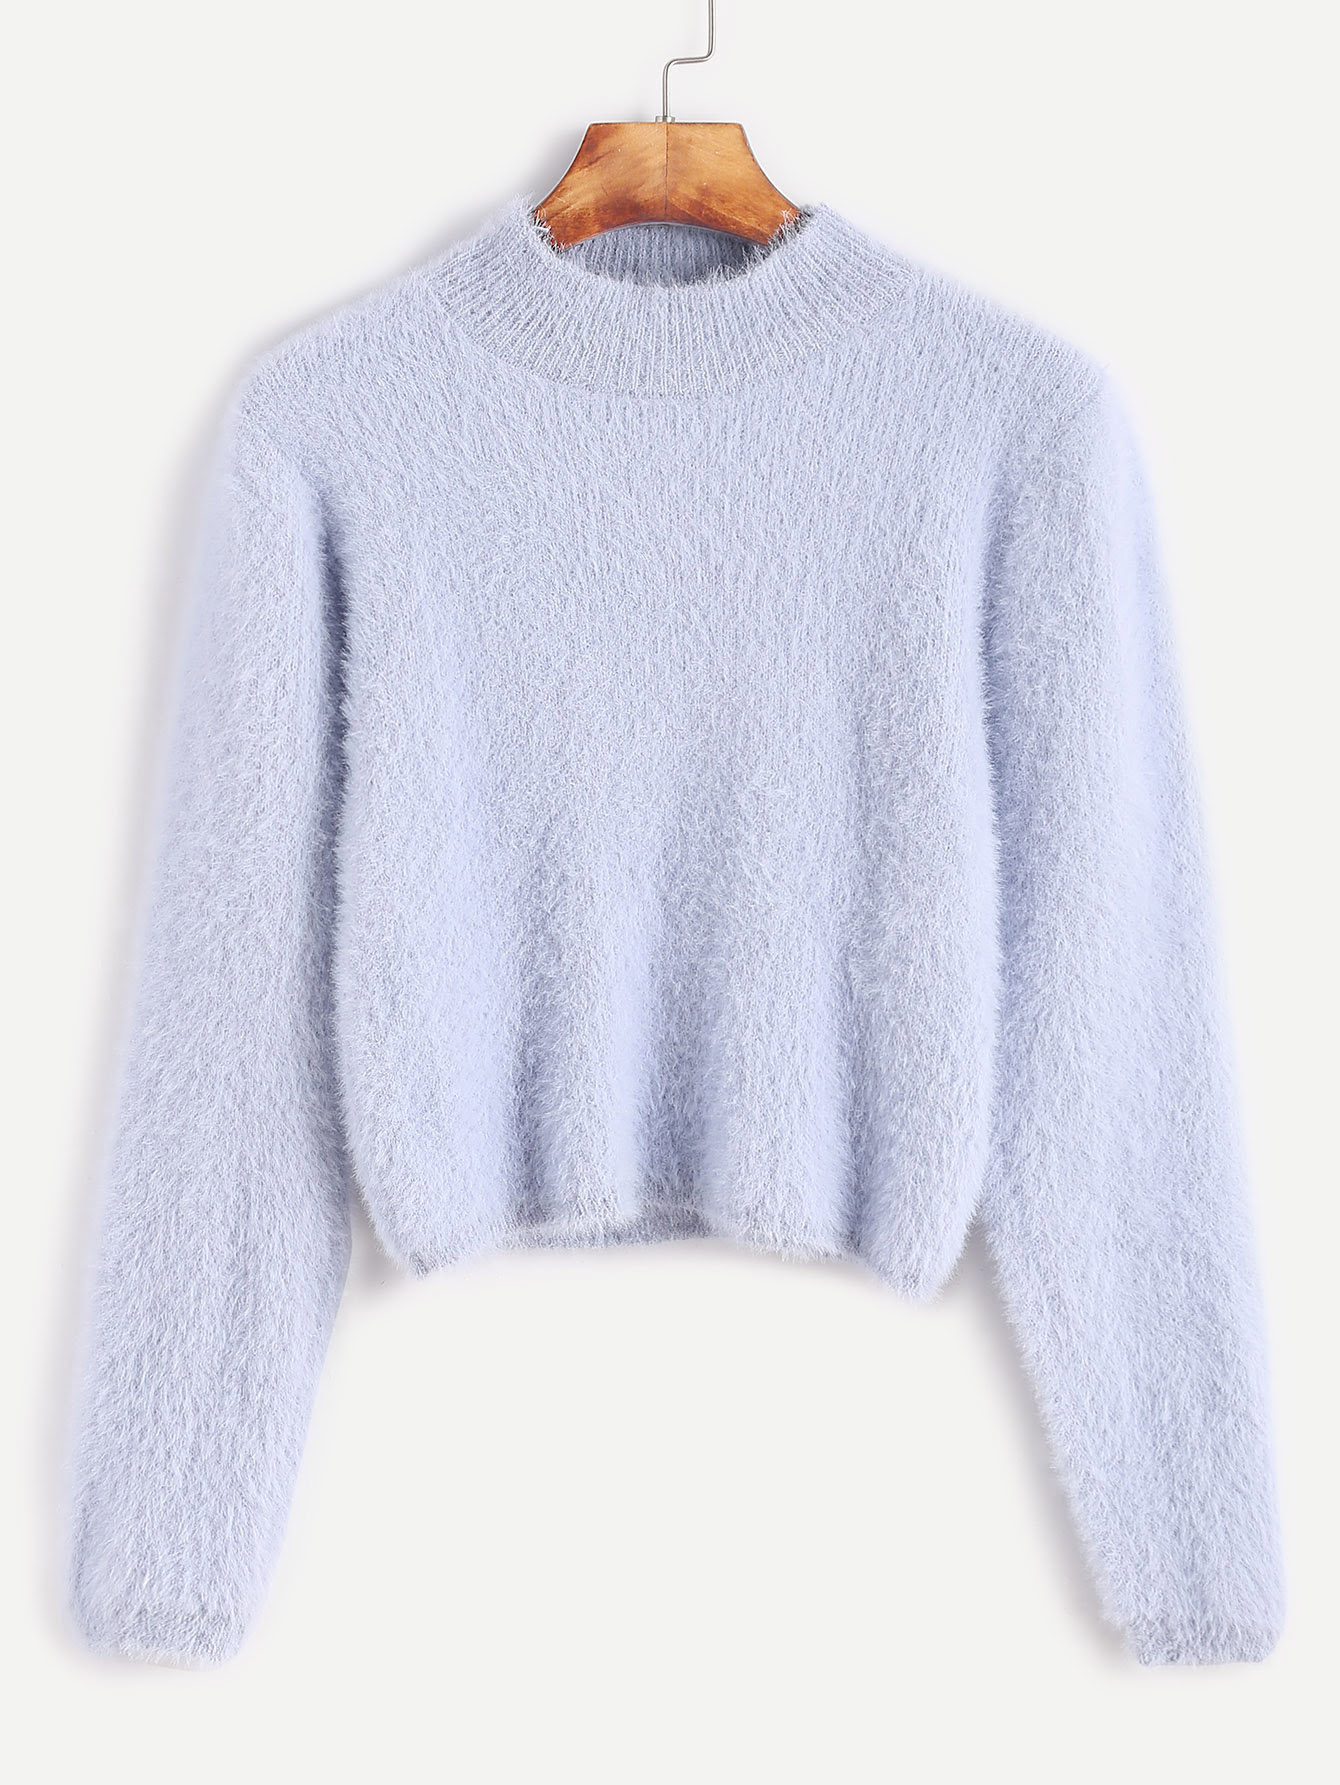 sweater161111301_2